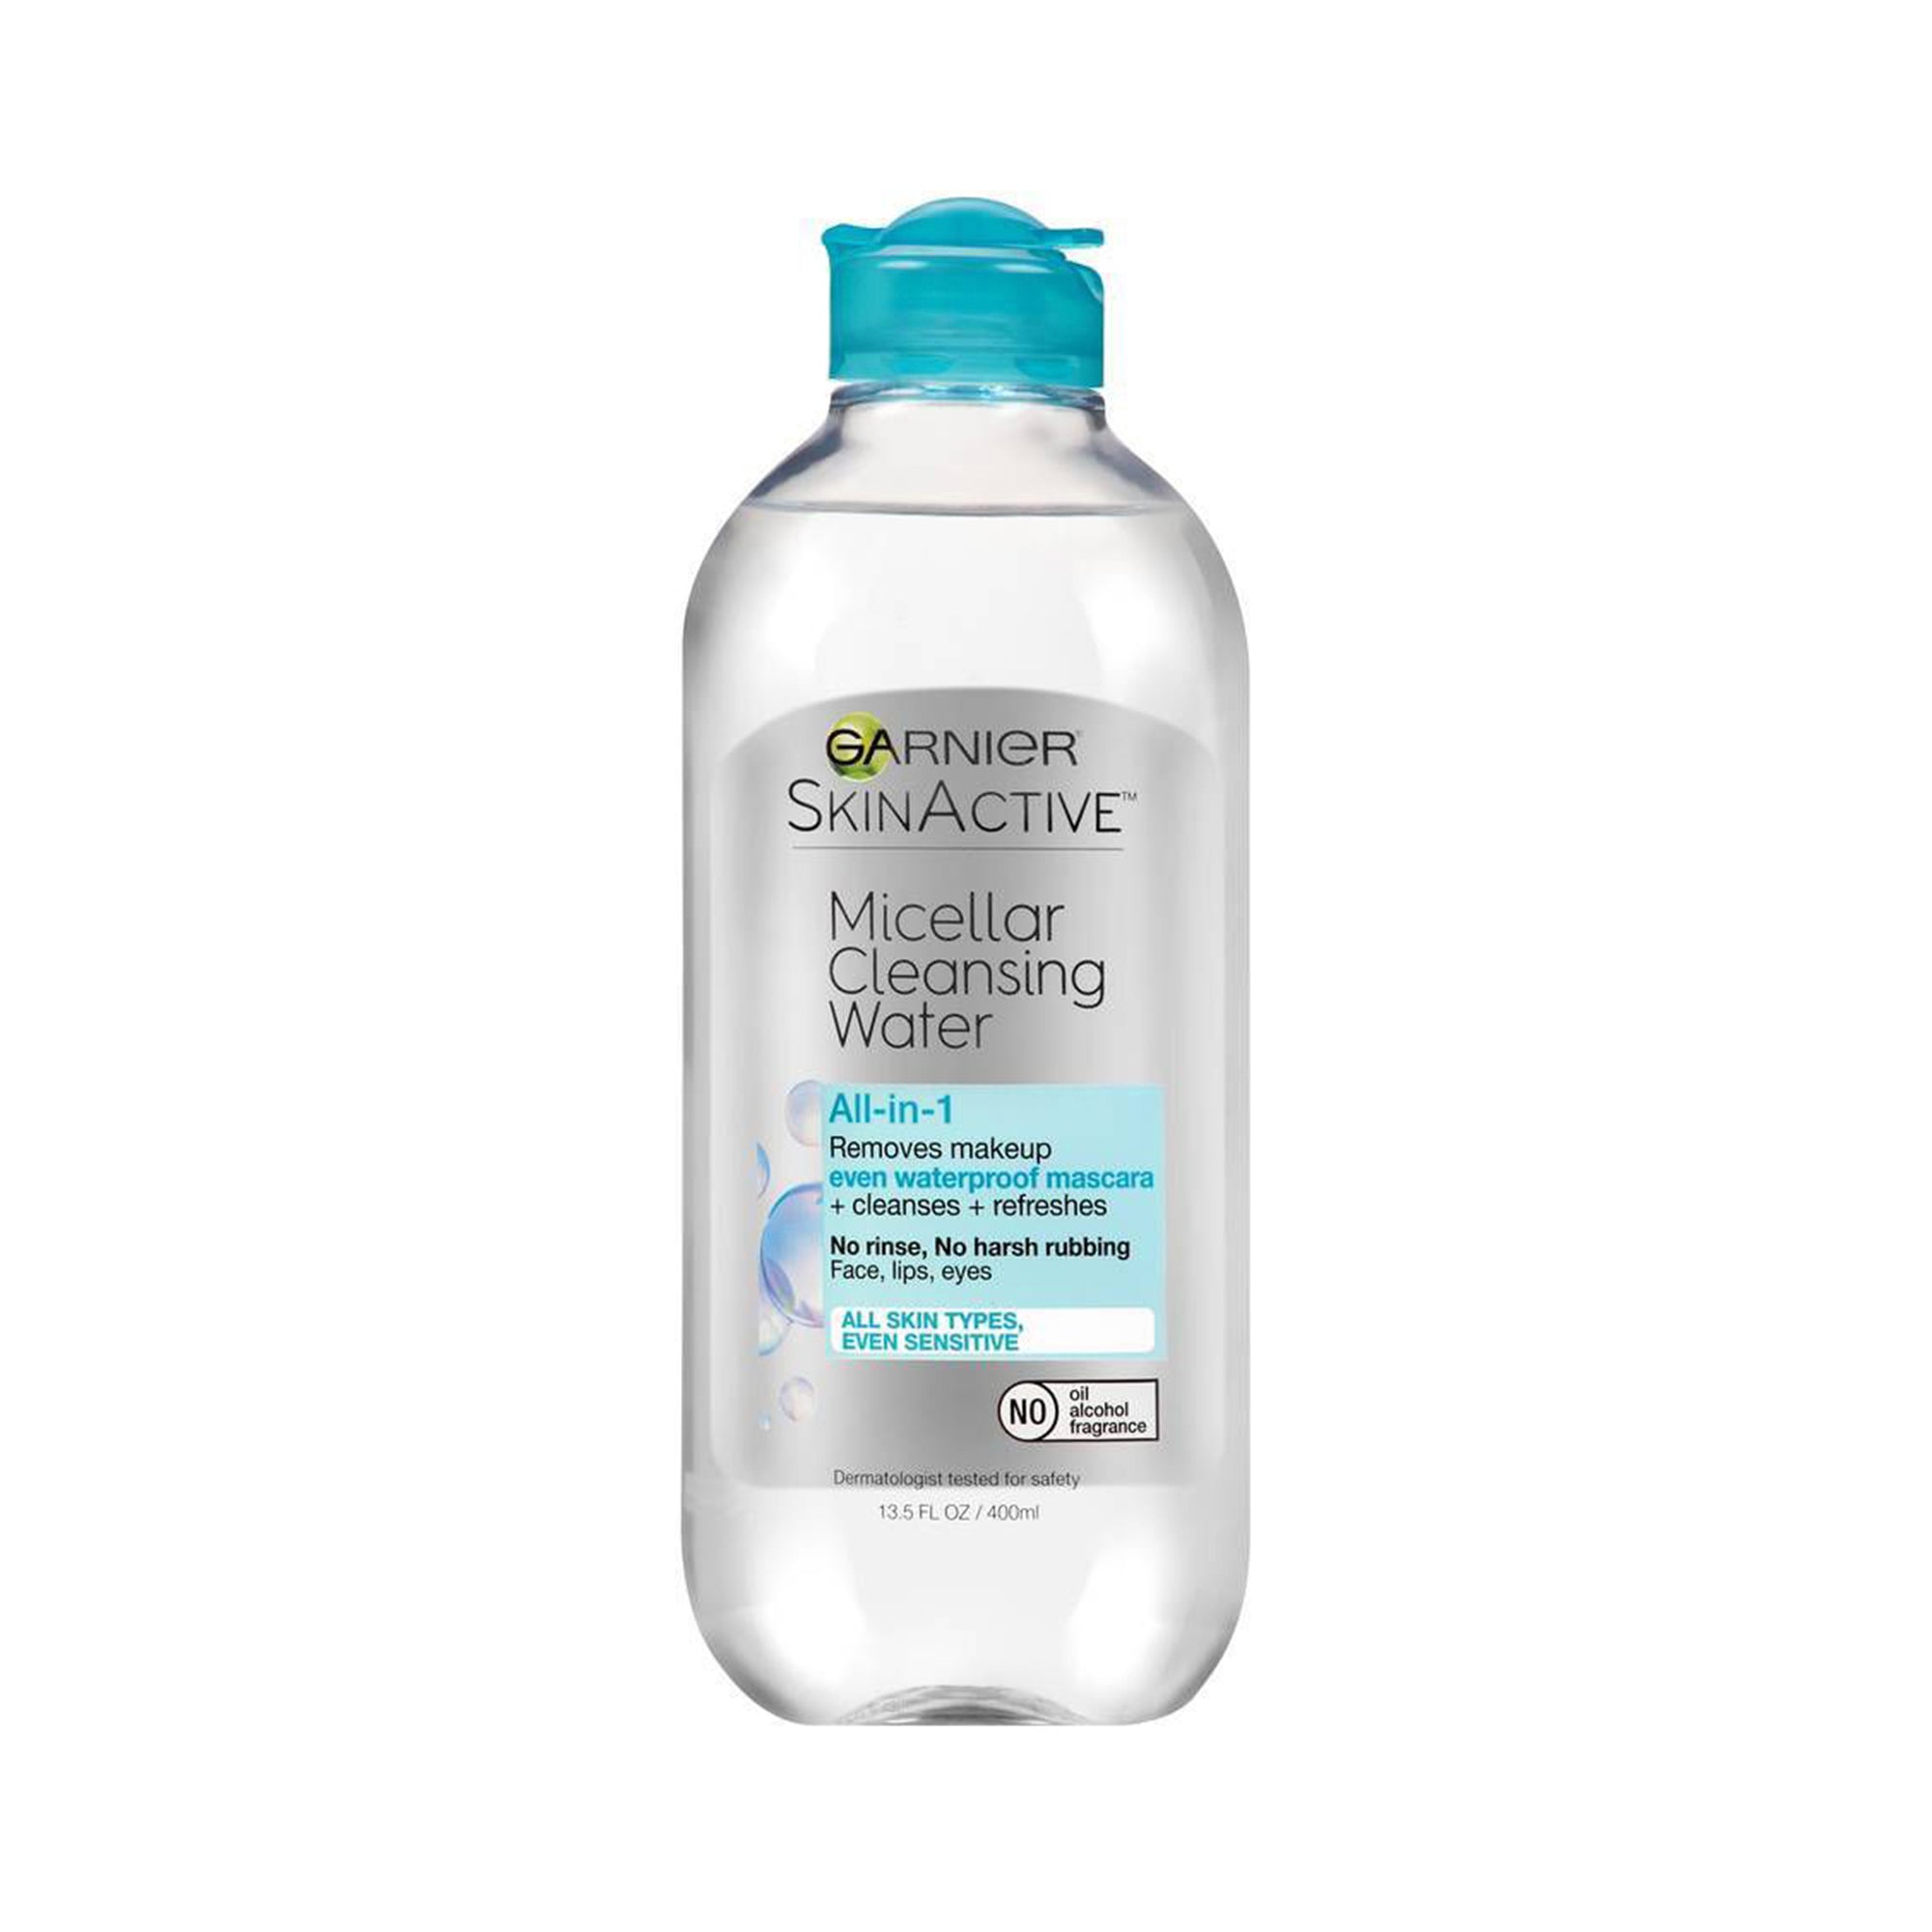 Garnier SkinActive Micellar Cleansing Water for Waterproof Makeup Remover, 13.5 fl oz